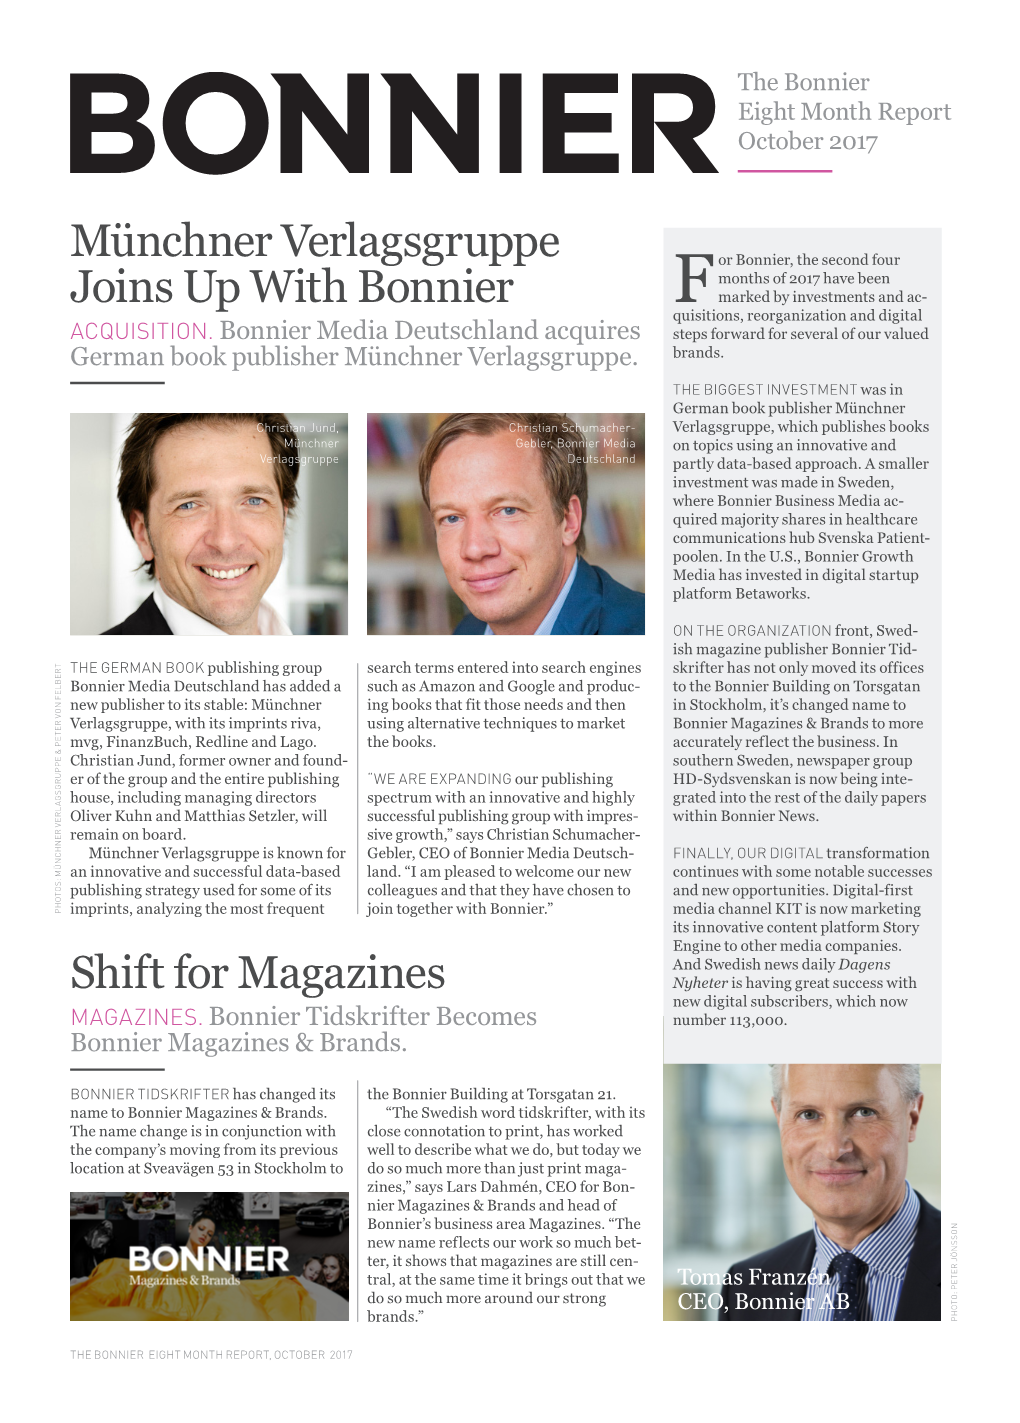 Münchner Verlagsgruppe Joins up with Bonnier Shift for Magazines